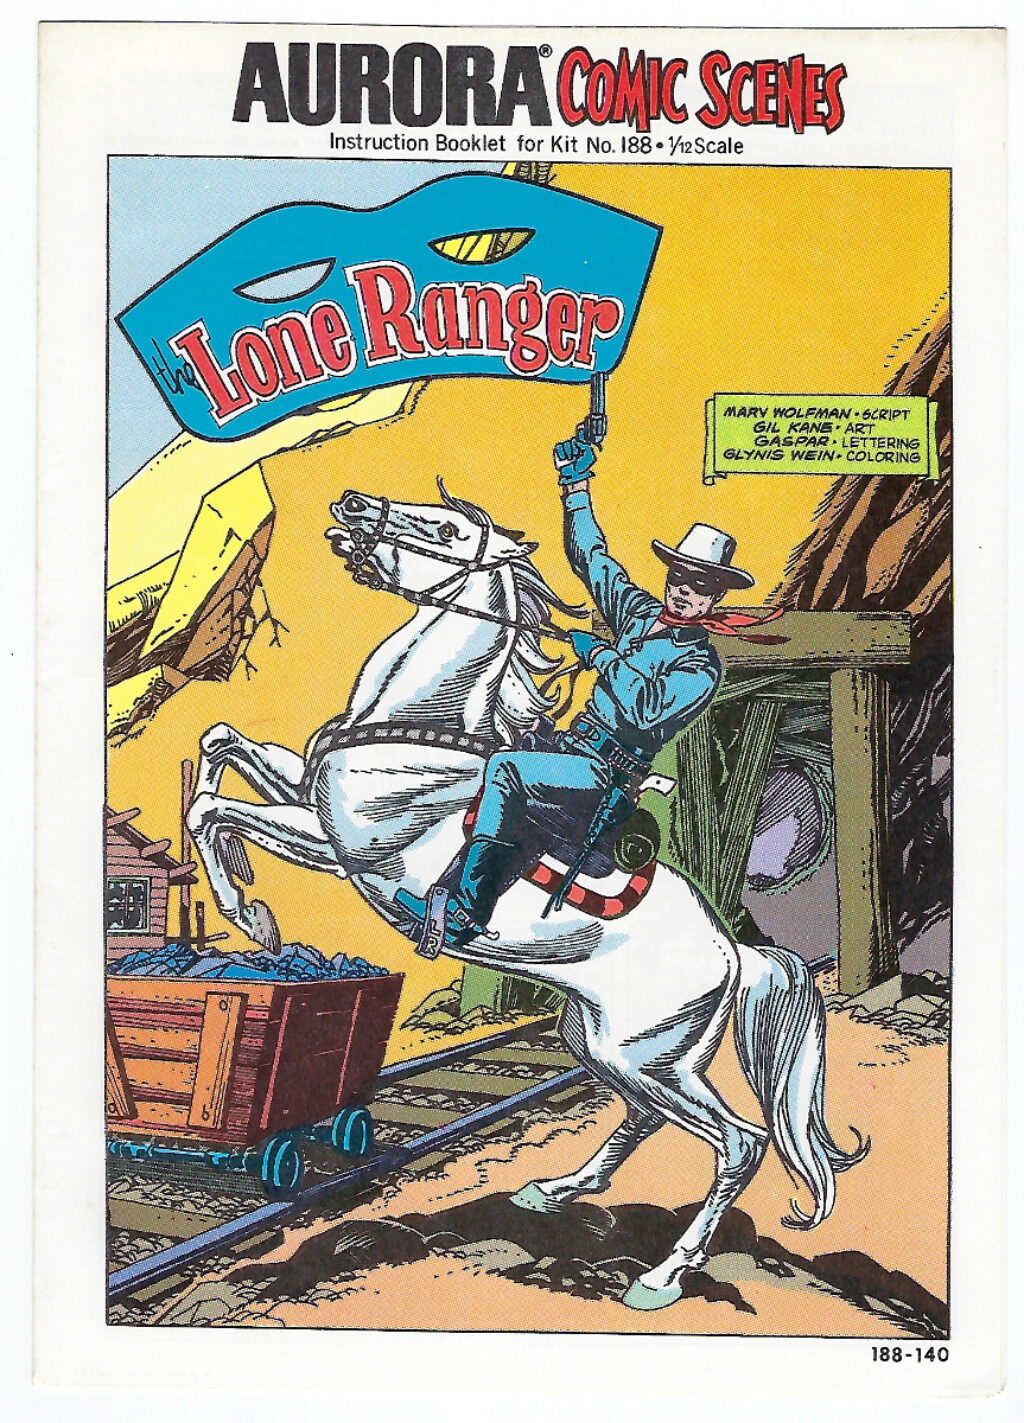 Aurora Comic Scenes Lone Ranger Model Kit Comic Book & Instructions Booklet 1